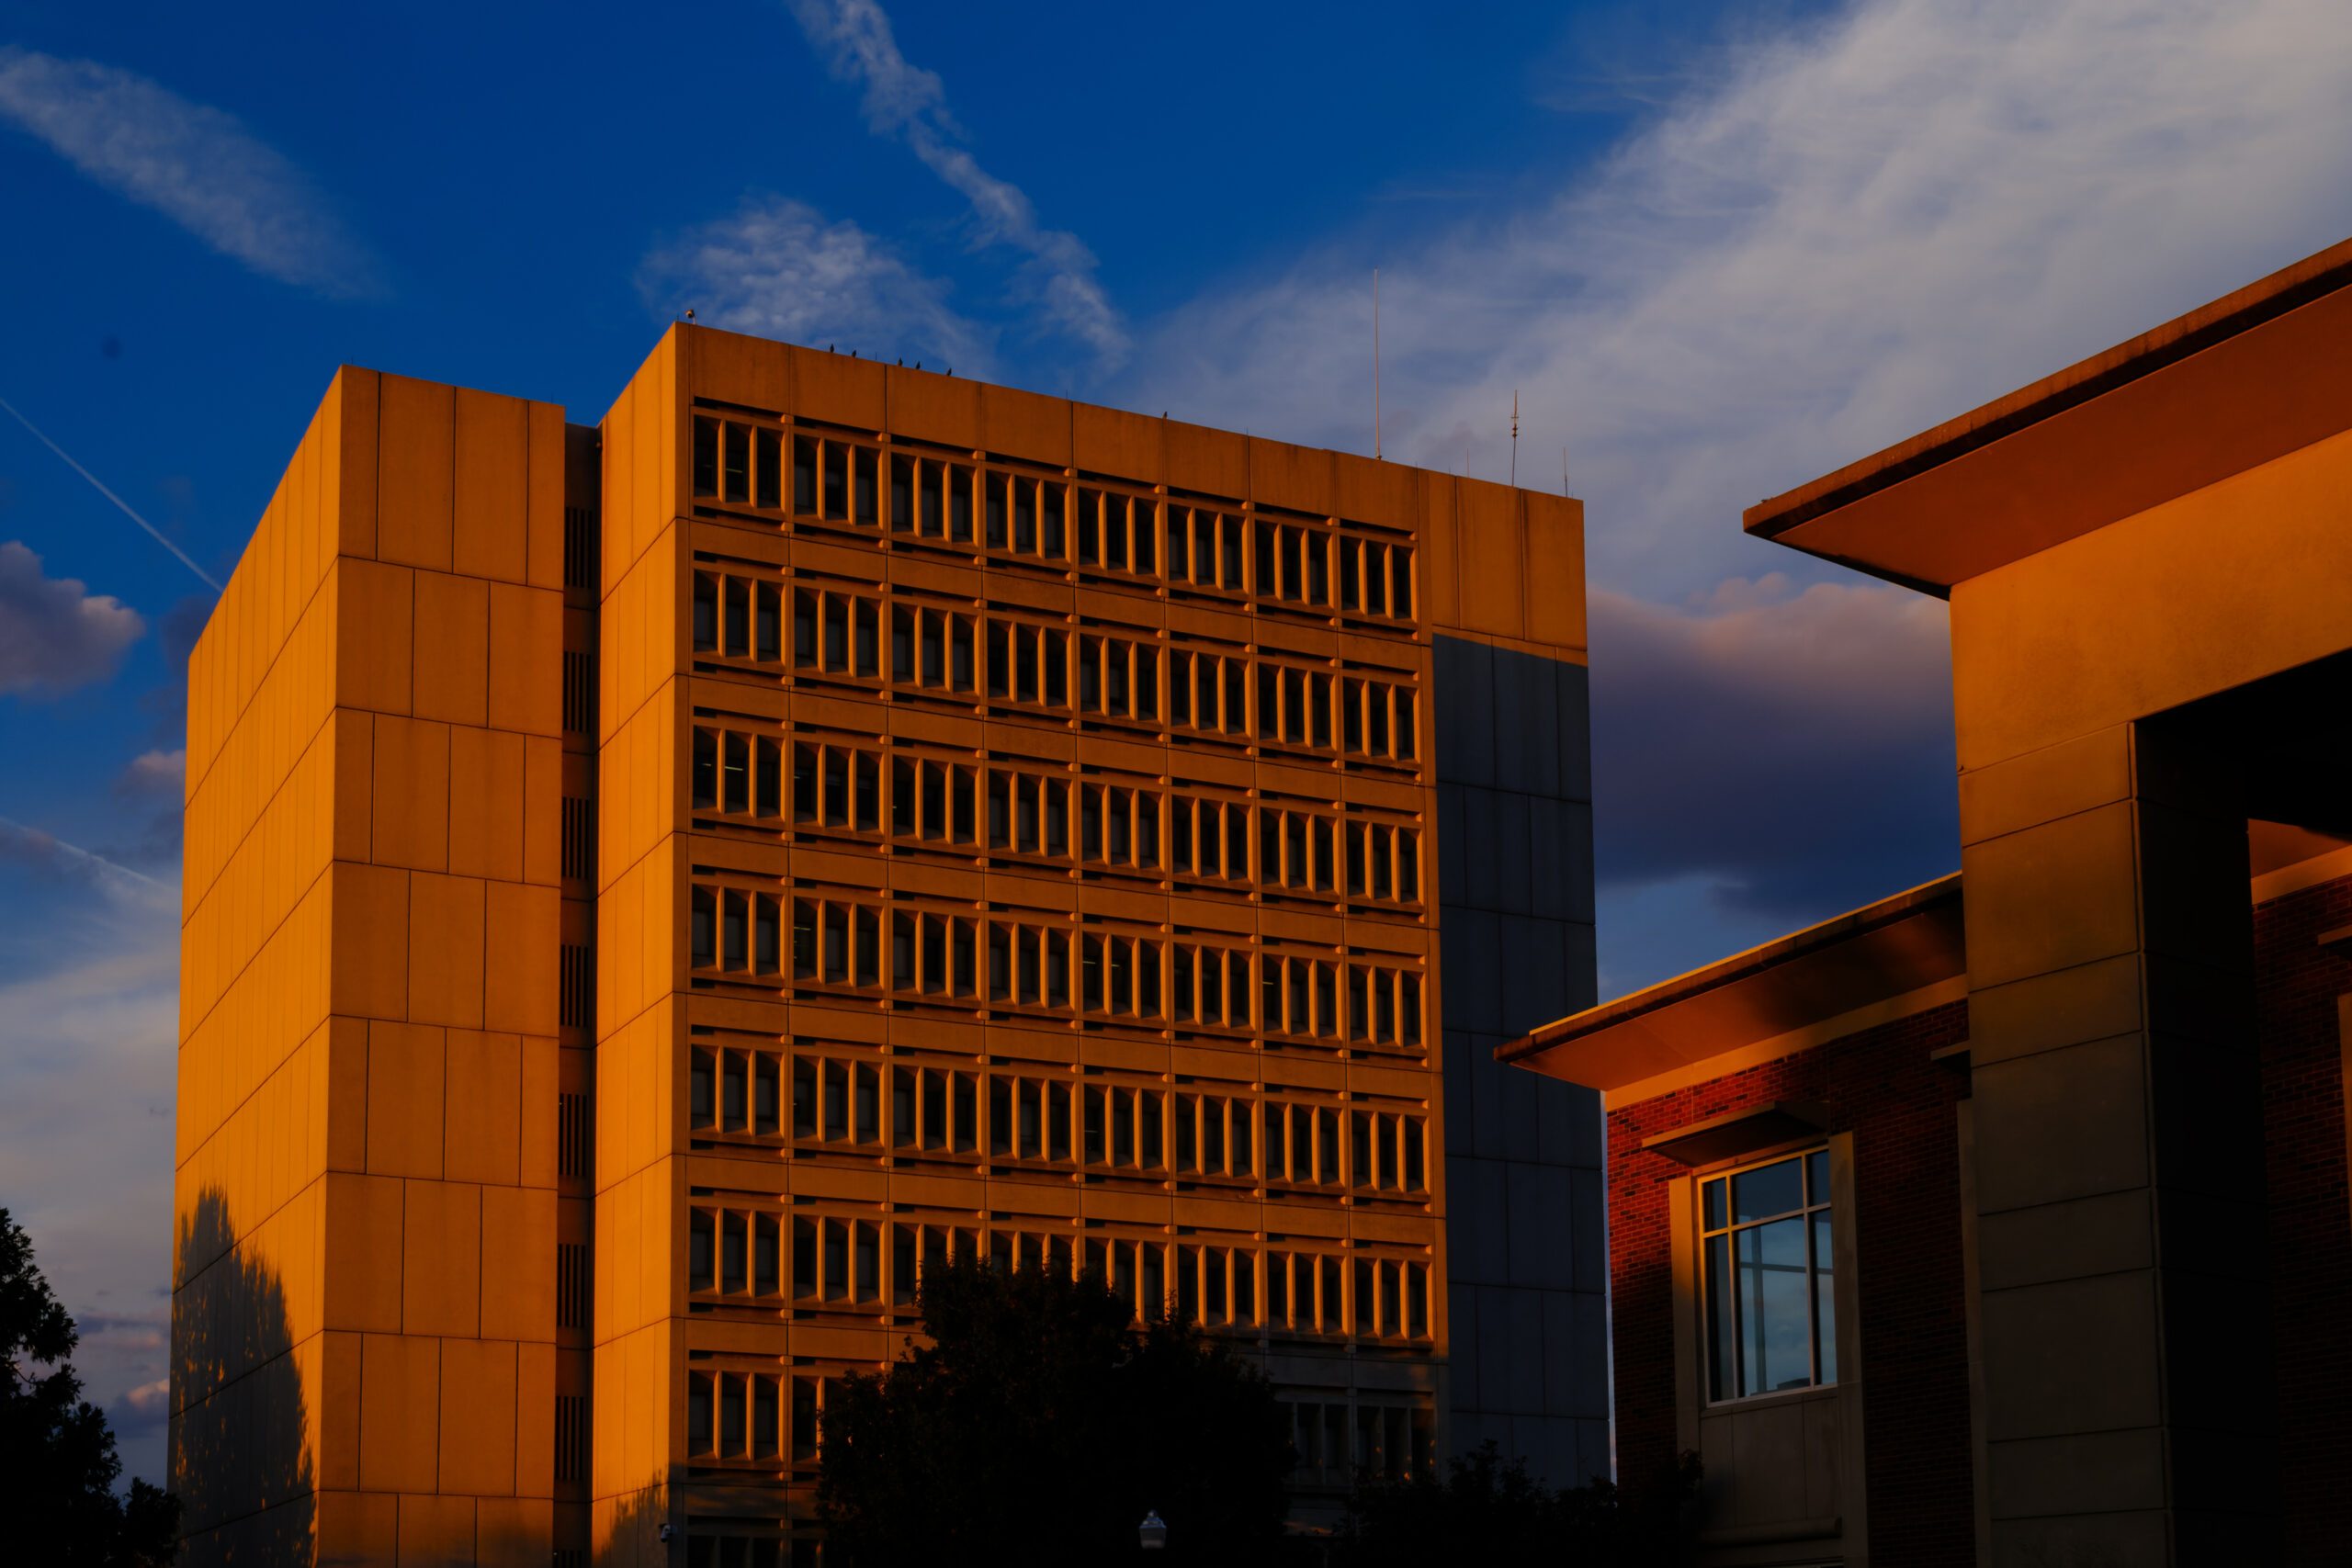 UNCG Jackson Library glows orange in the sunset.